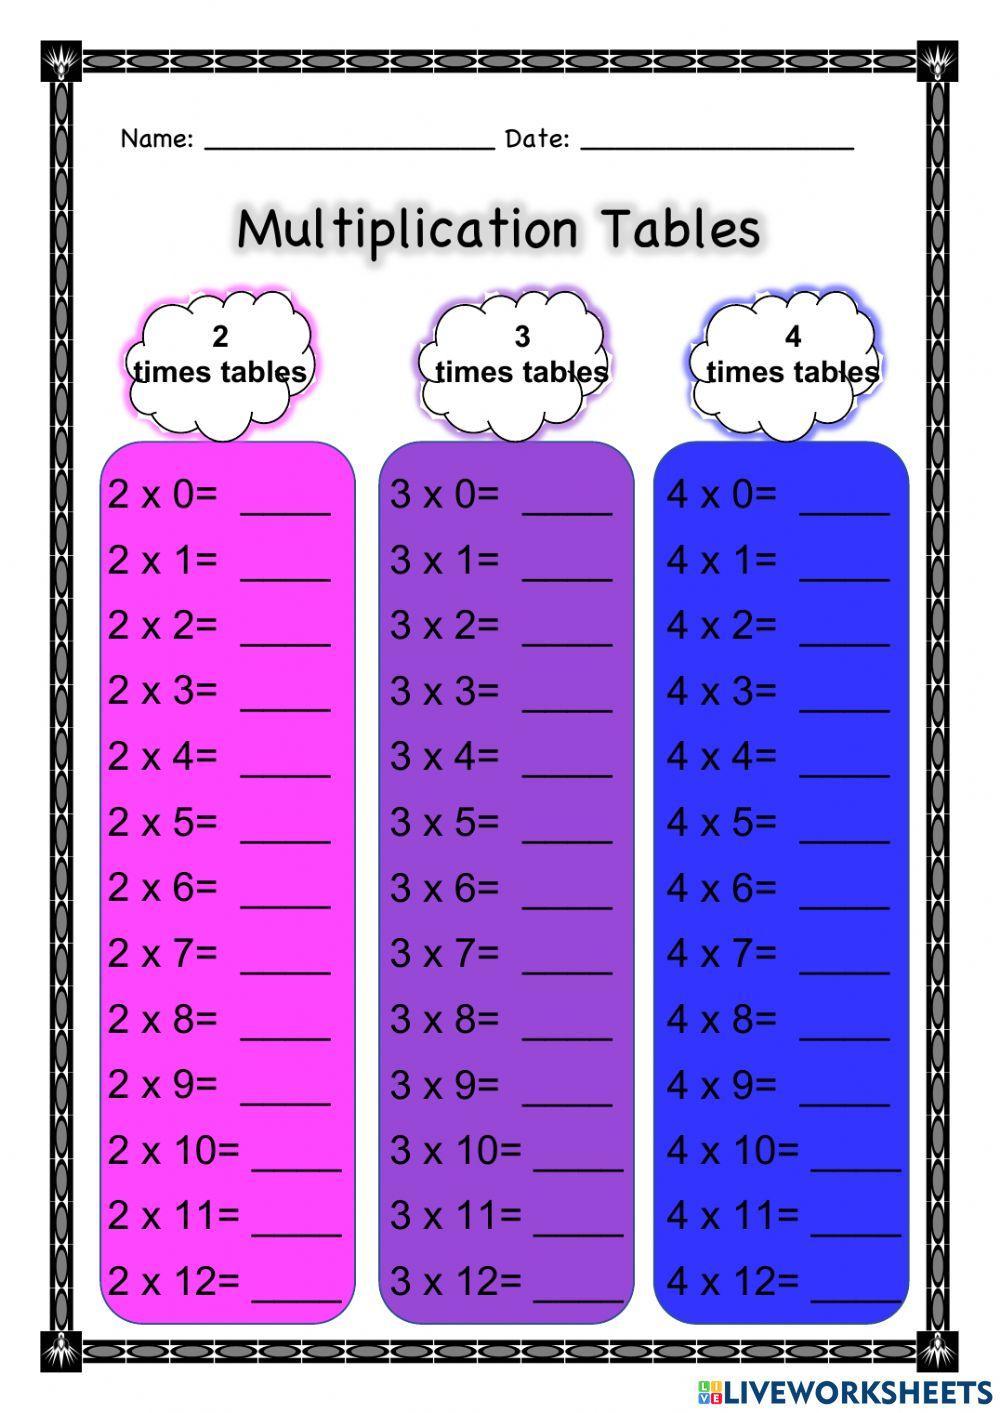 Multiplication Tables (2, 3, 4)